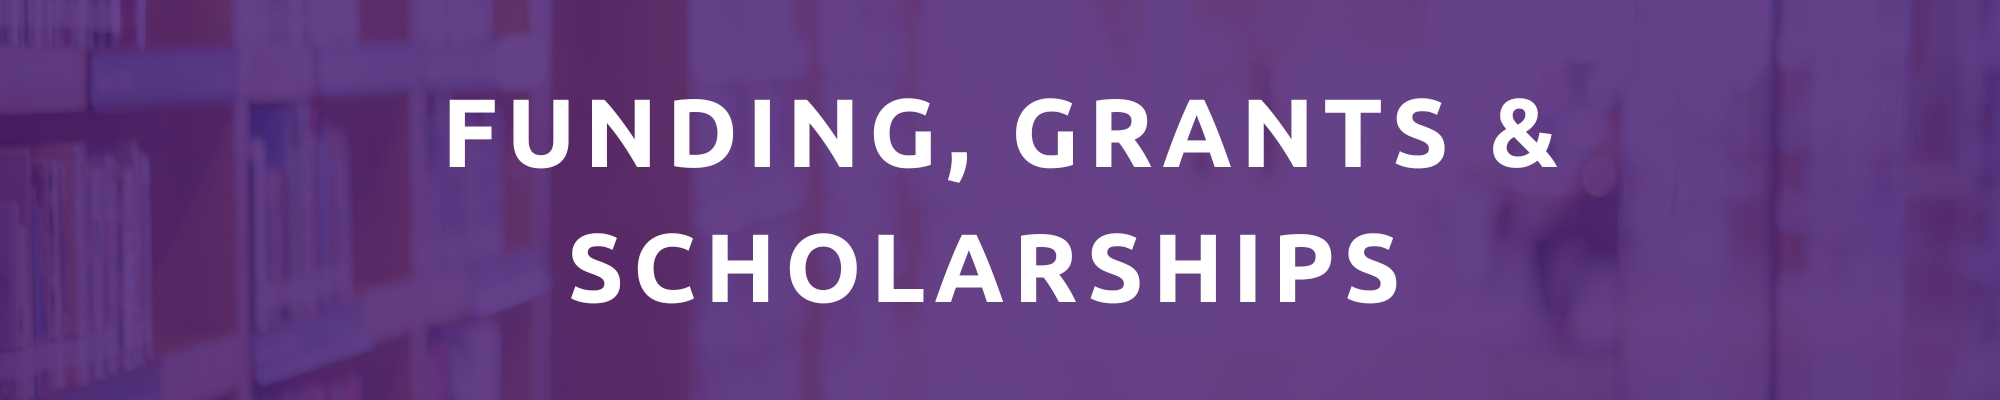 Funding, Grants & Scholarships Women in Tech